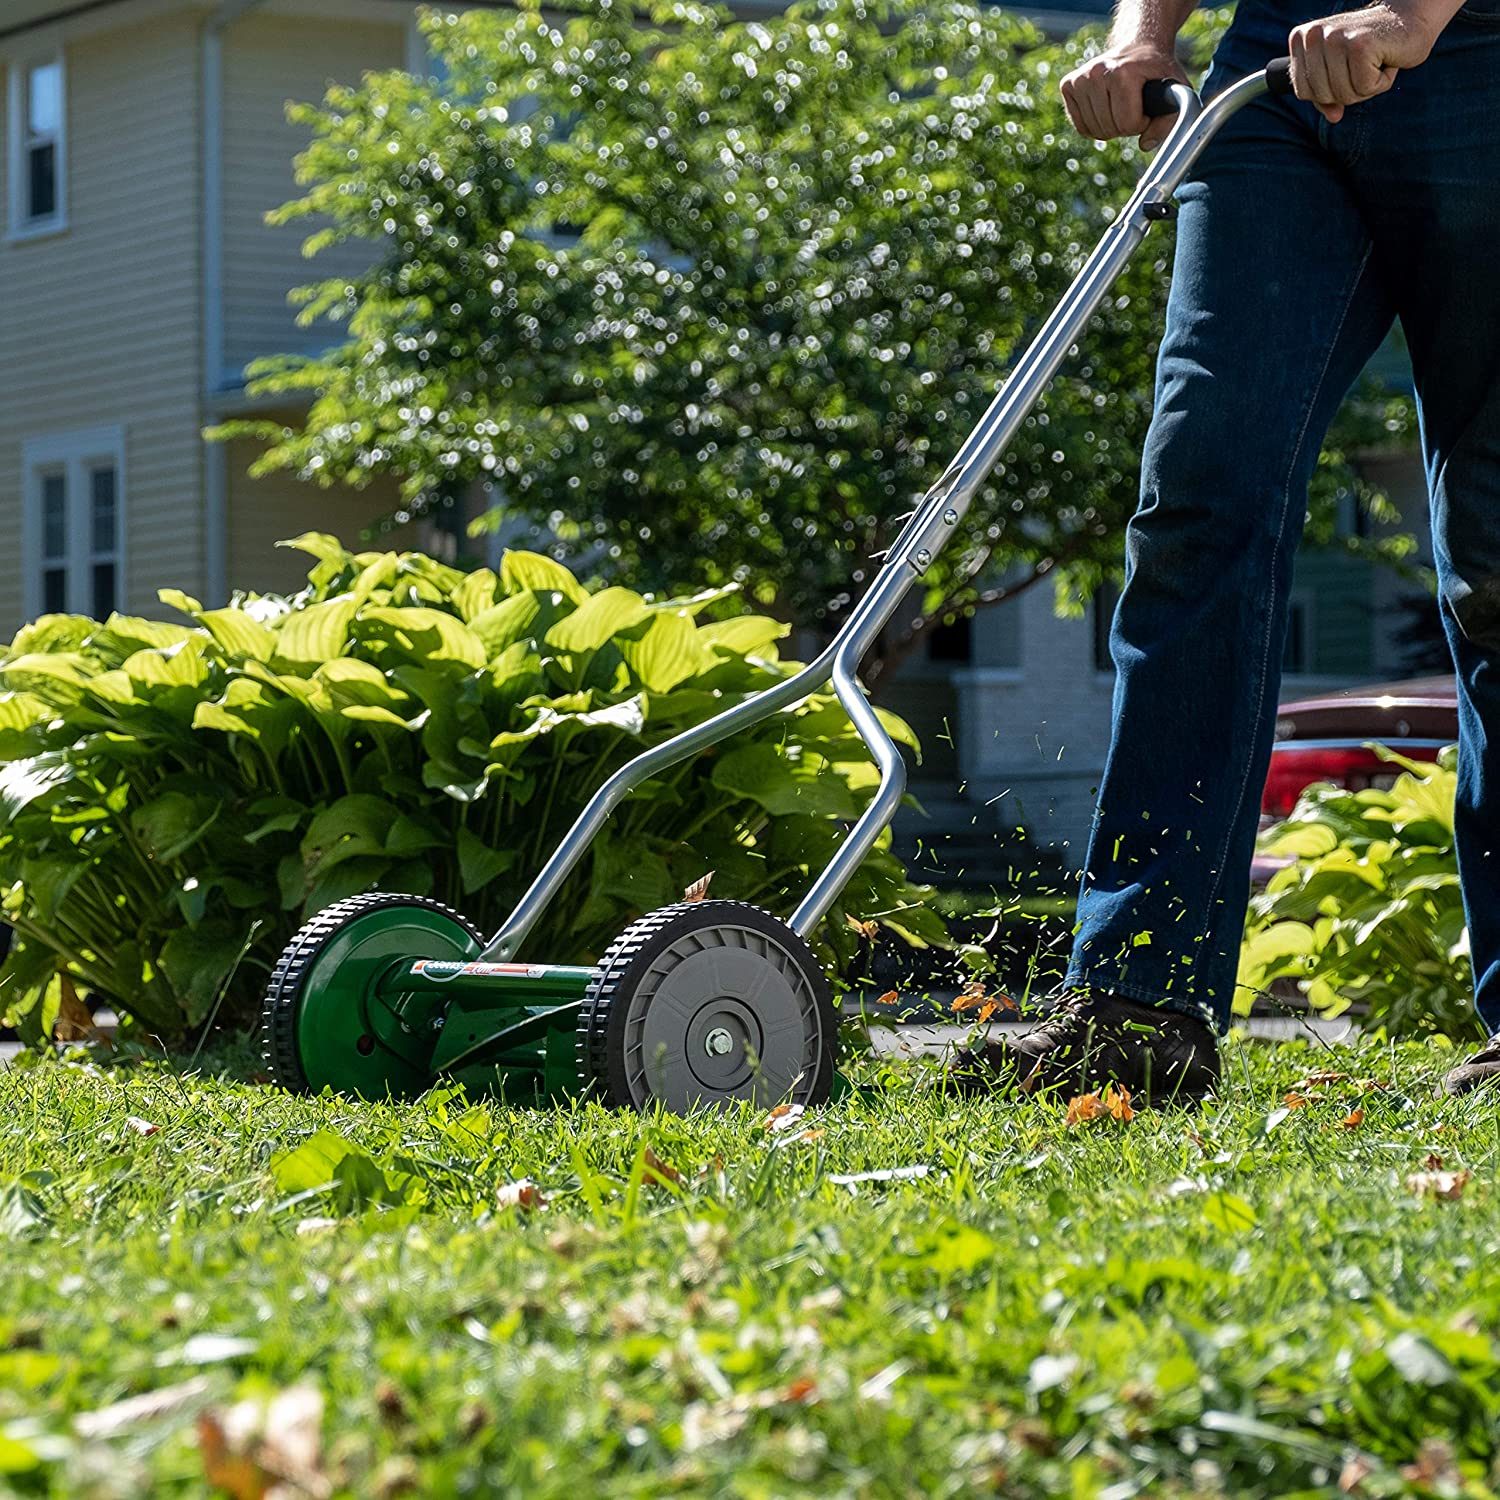 https://www.familyhandyman.com/wp-content/uploads/2022/03/scotts-push-reel-lawn-mower-10-best-lawn-mowers-for-small-residential-lawns-ft-via-amazon.com_.jpg